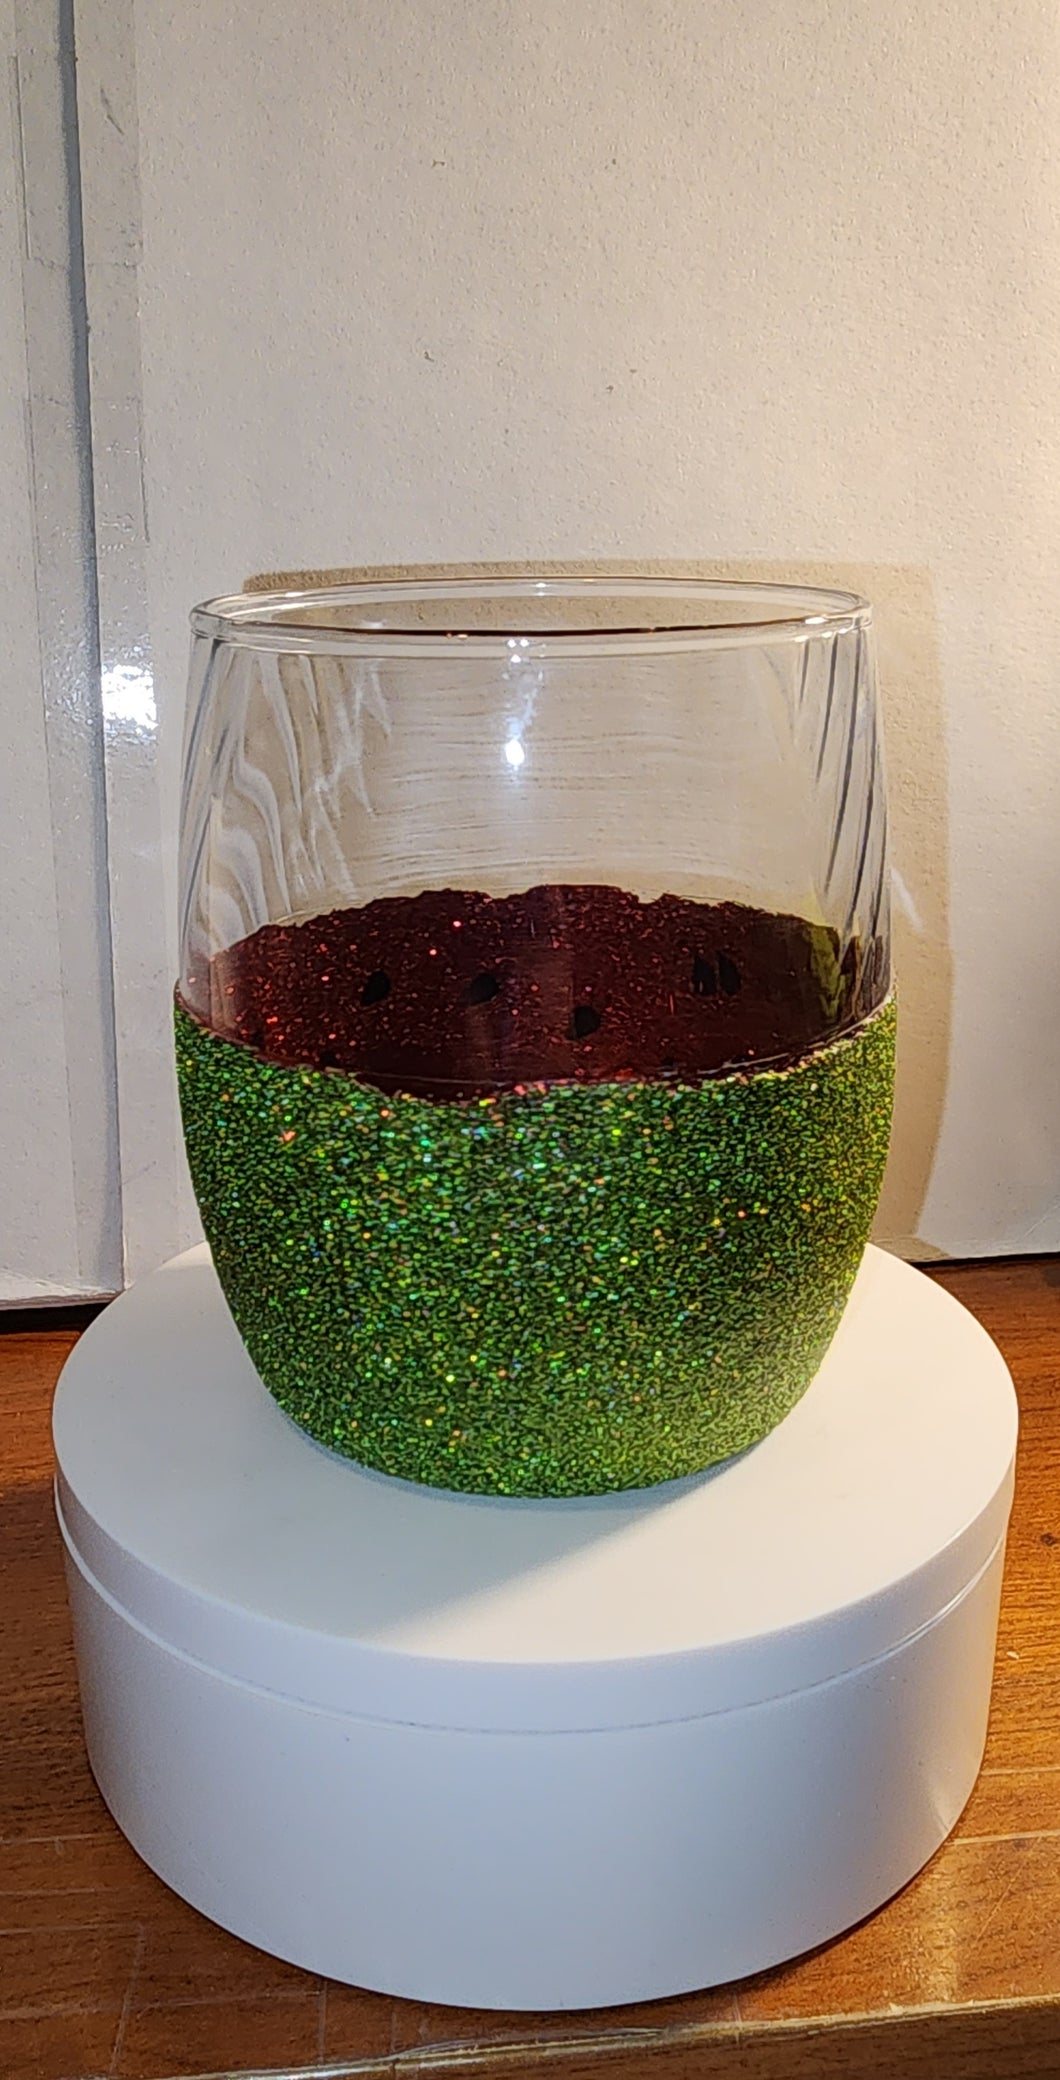 6 oz. Glittered stemless wine glass